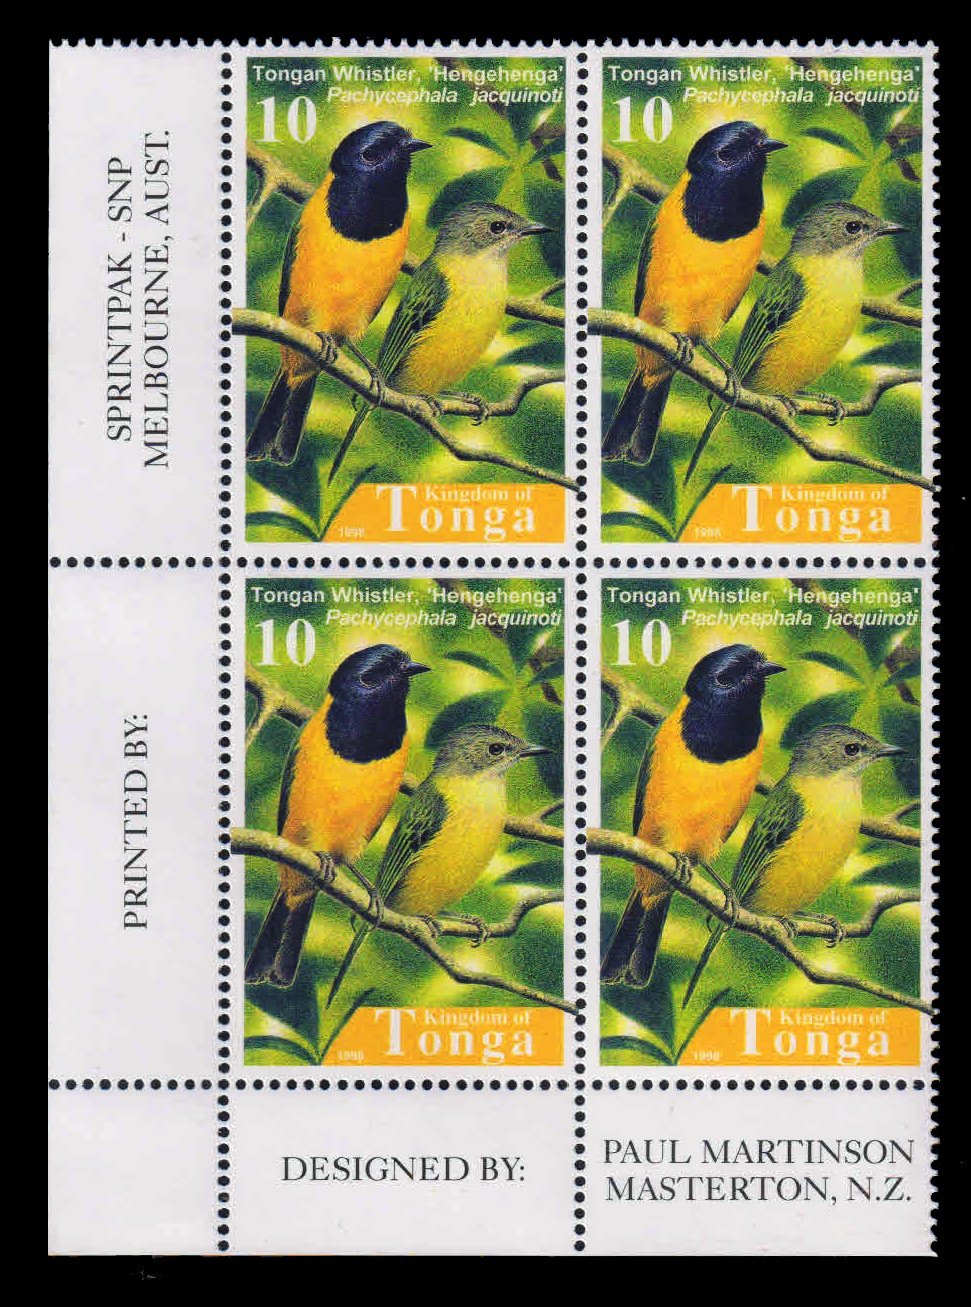 TONGA 1998 - Birds. Tongan Whistler. Block of 4, MNH. S.G. 1426